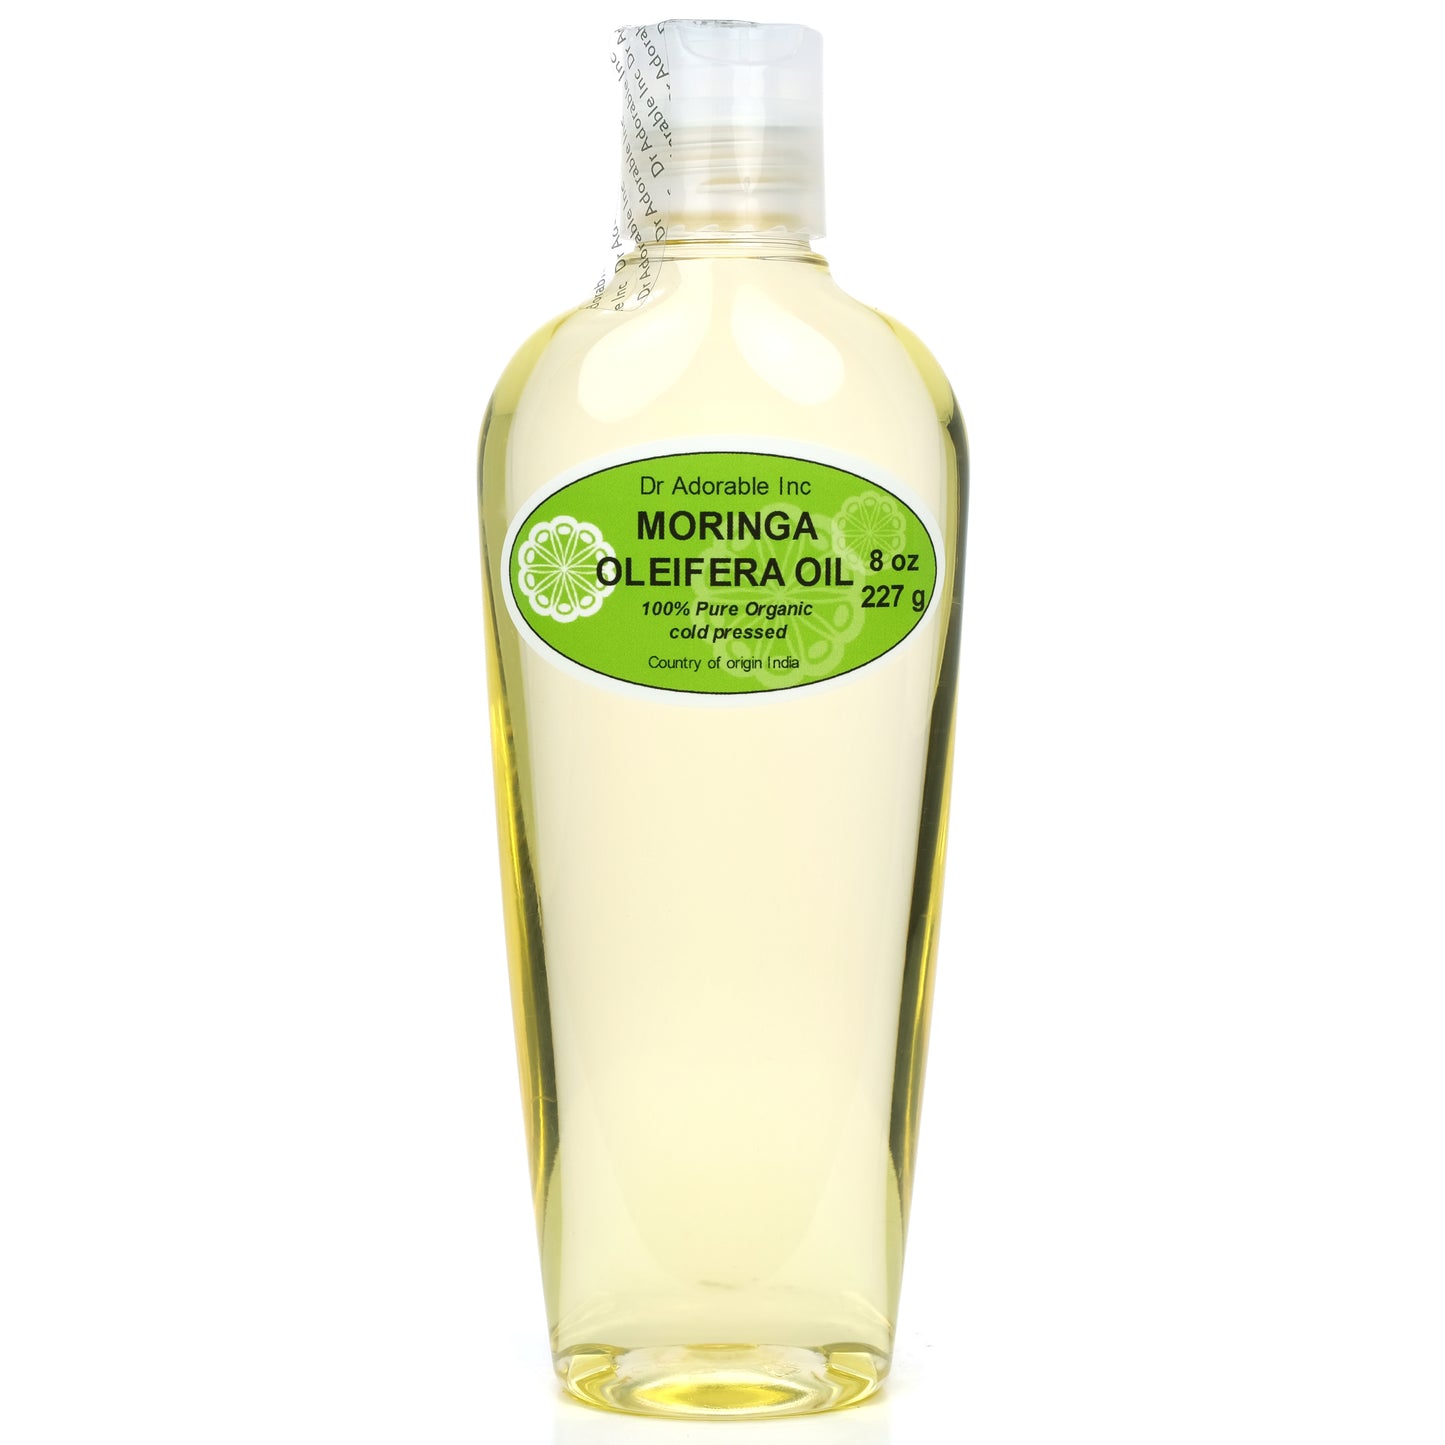 Moringa Oleifera Oil - 100% Pure Organic Natural Cold Pressed